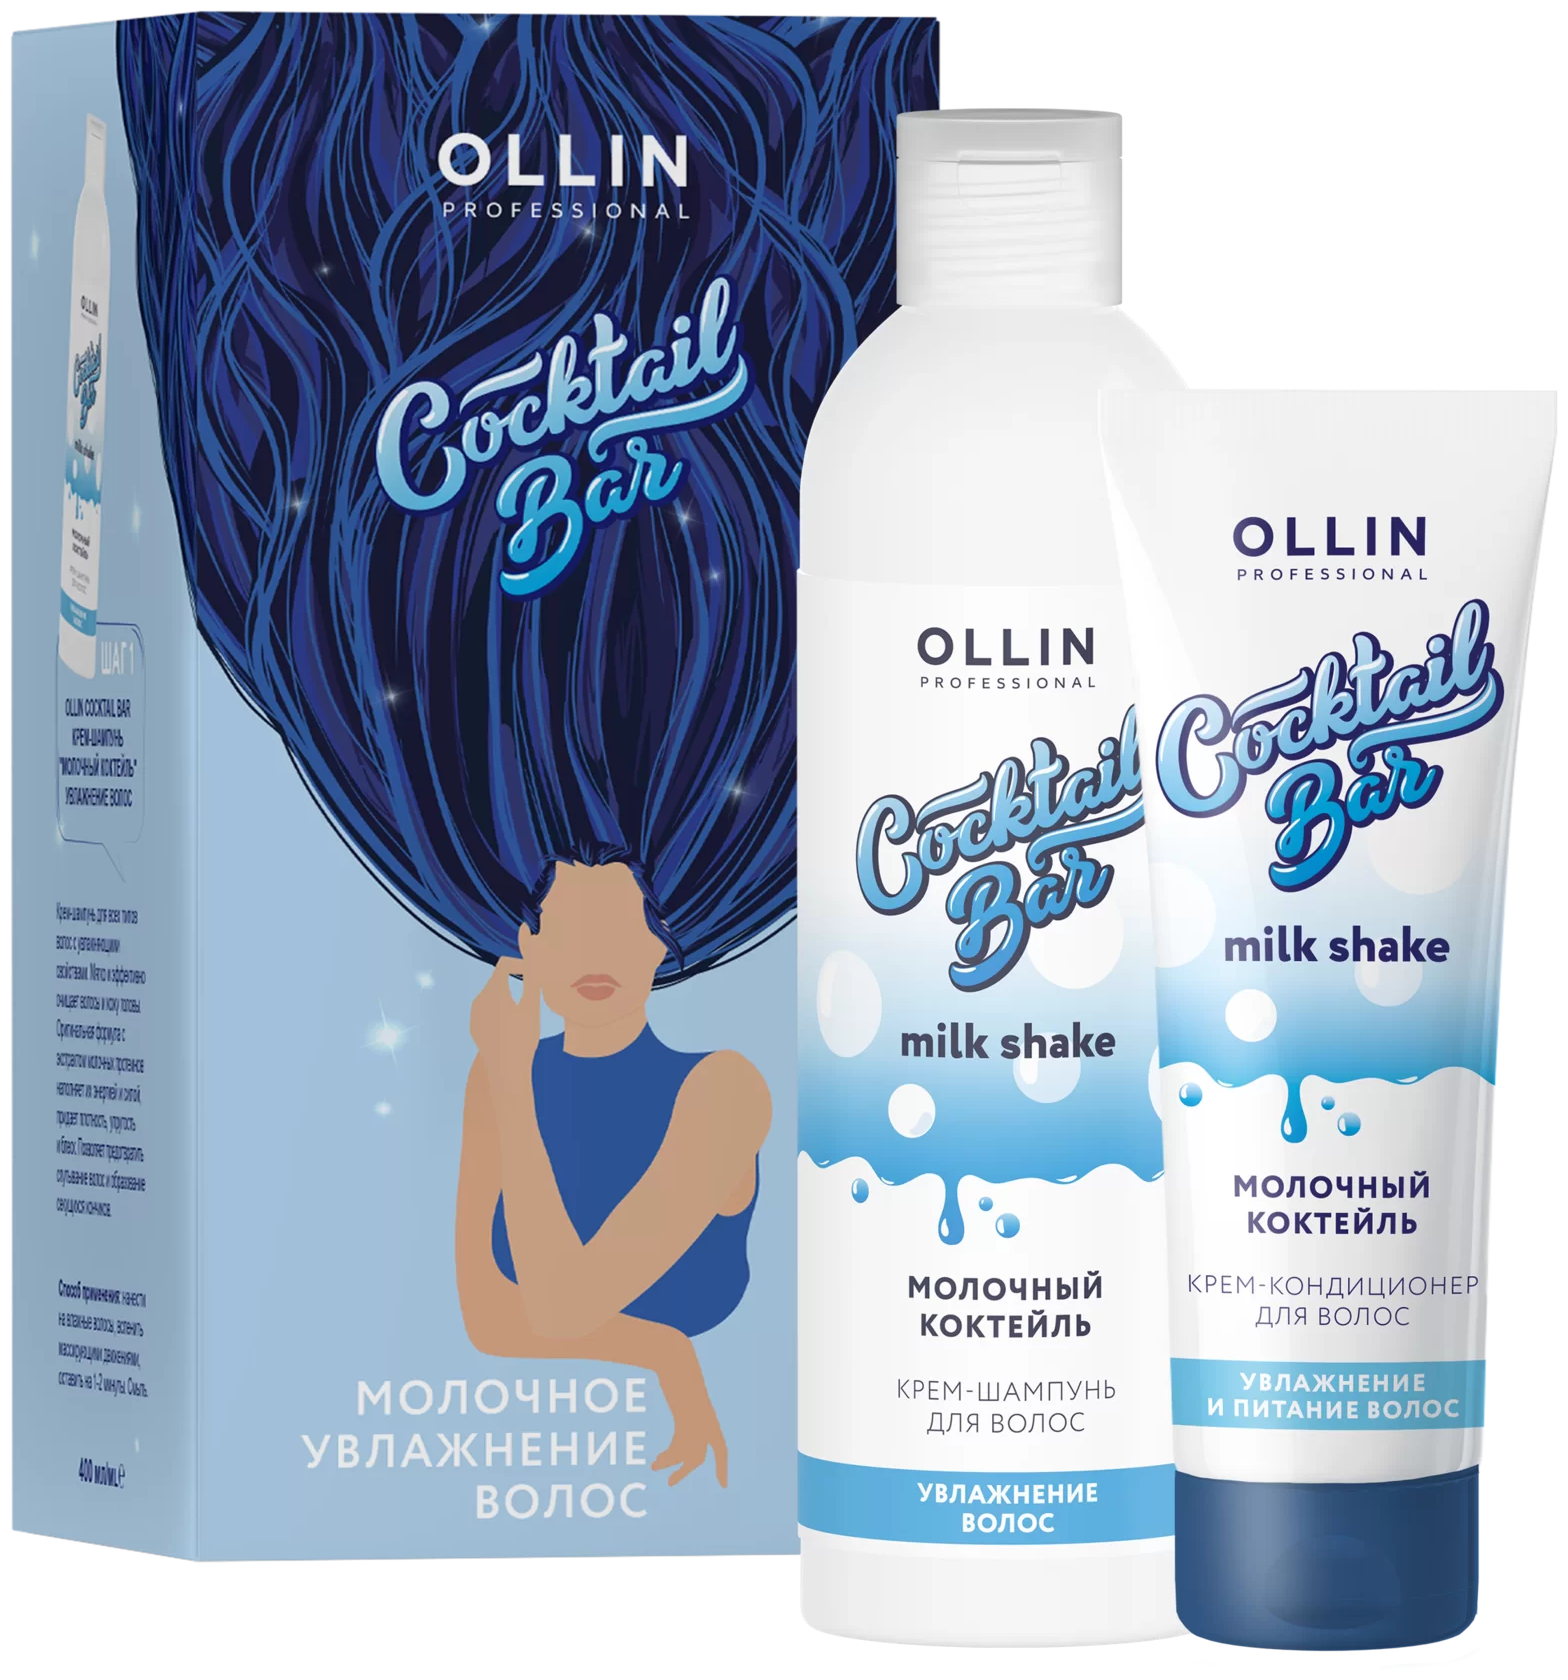 OLLIN PROFESSIONAL Набор для волос Молочный коктейль (крем-шампунь 400 мл + крем-кондиционер 250 мл) Cocktail Bar - фото №1